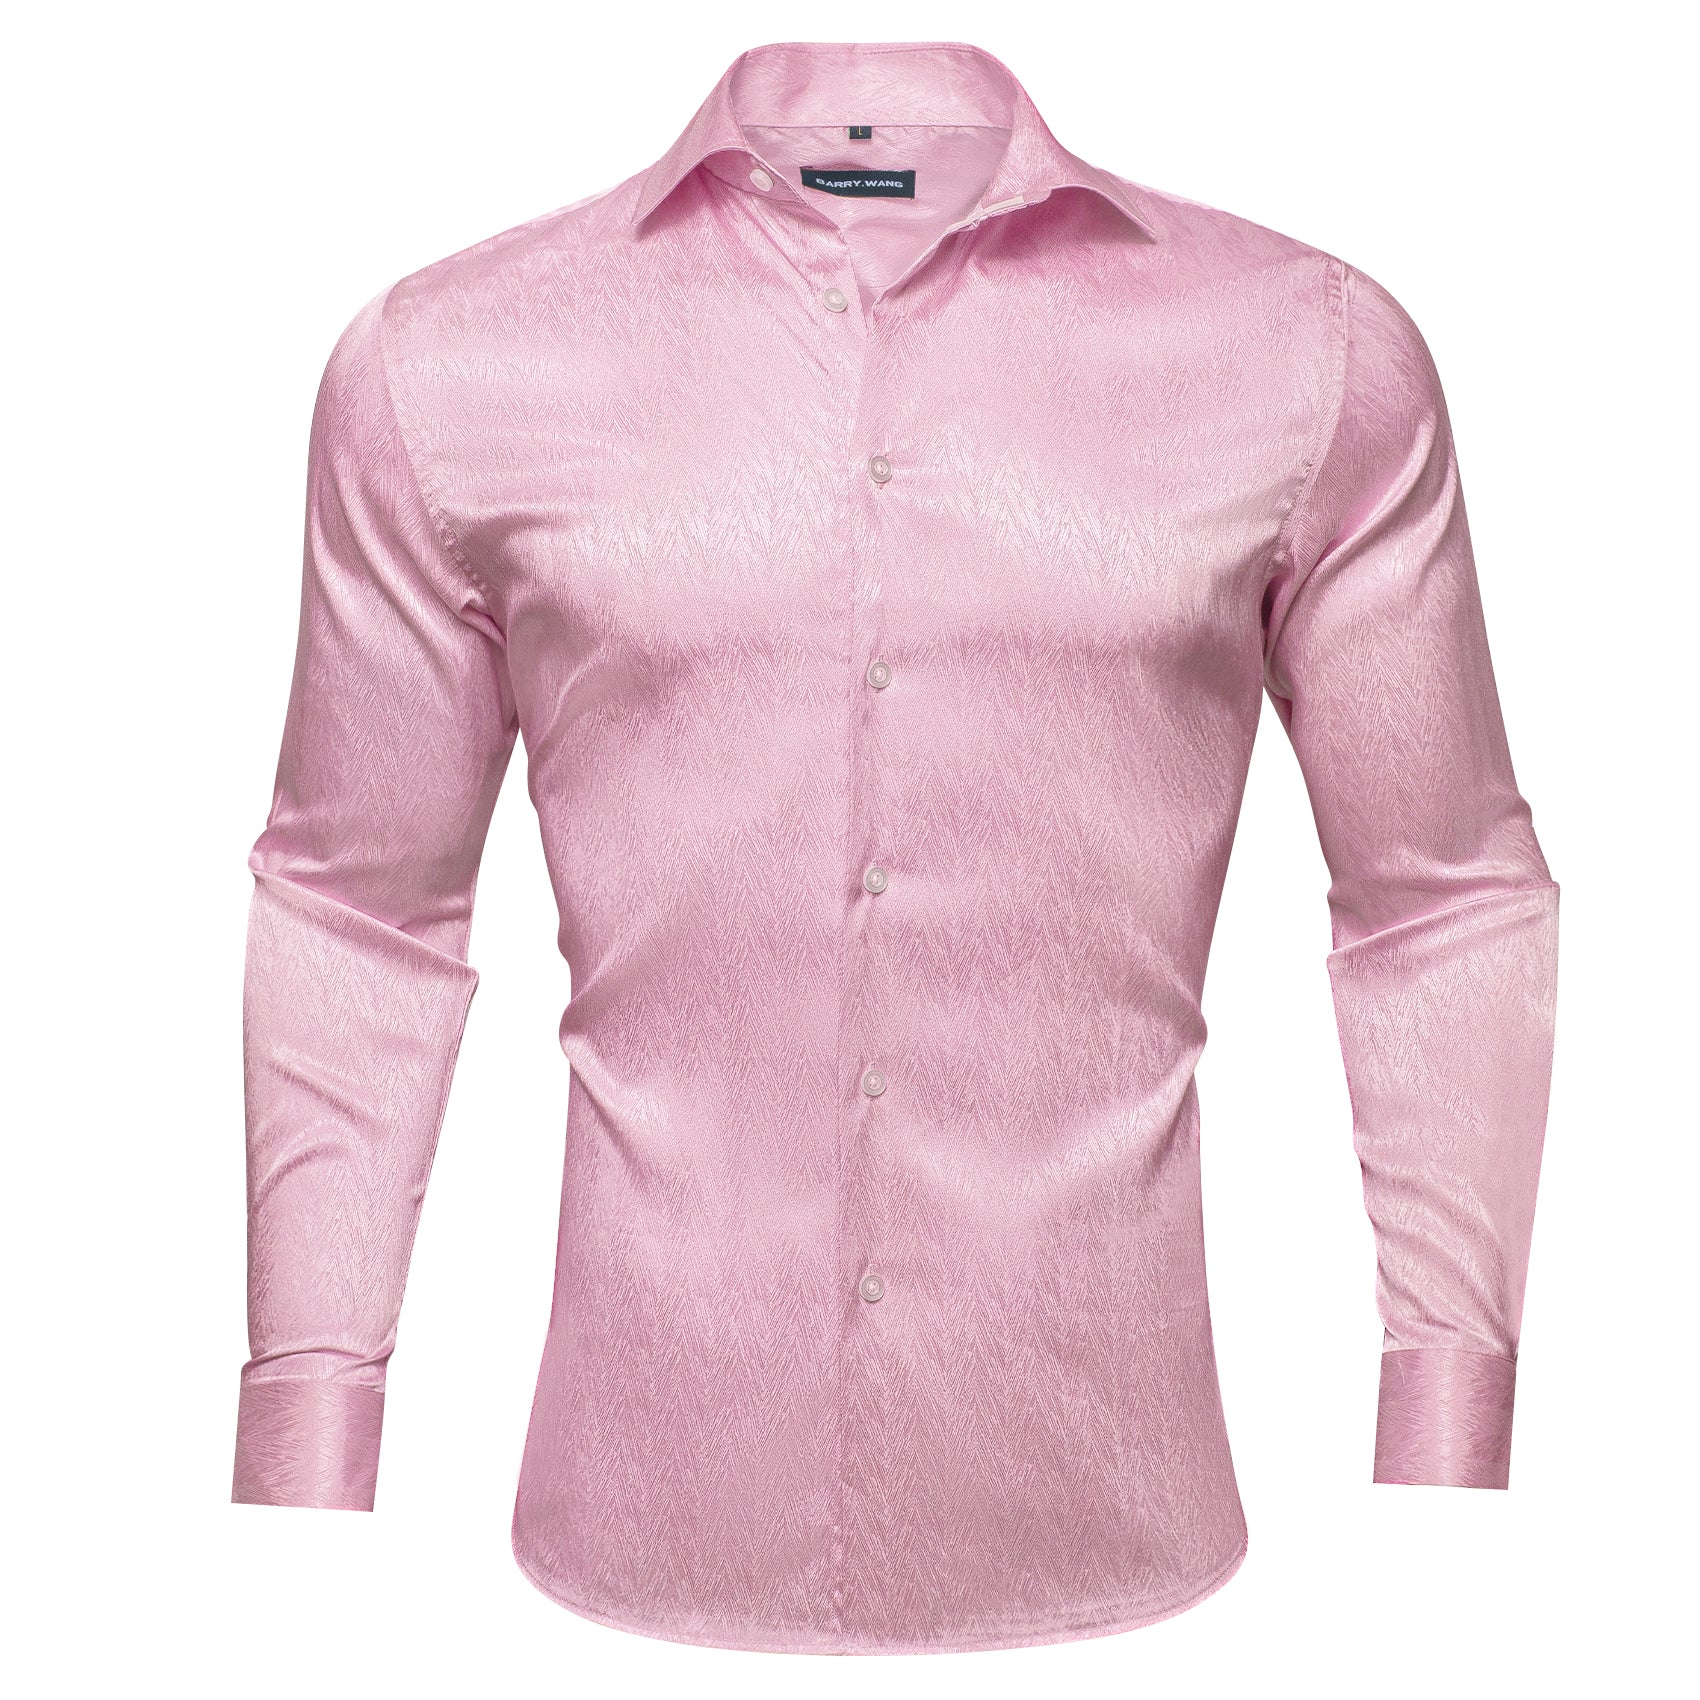 Barry.wang Fashion Light Pink Solid Silk Shirt